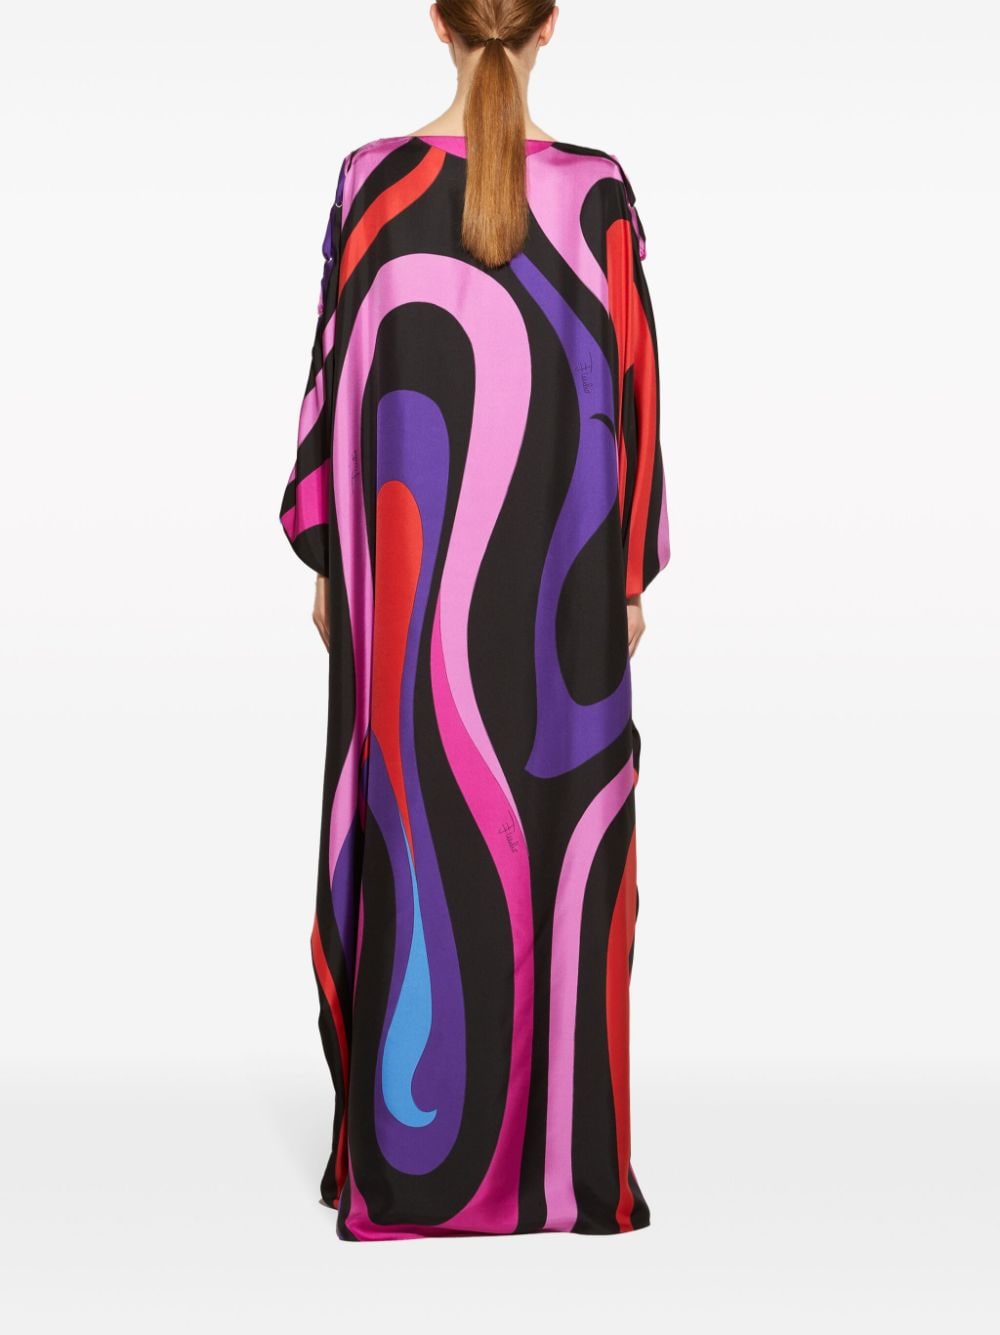 EMILIO PUCCI Multicolour Silk Caftan Dress in Abstract Print for Women